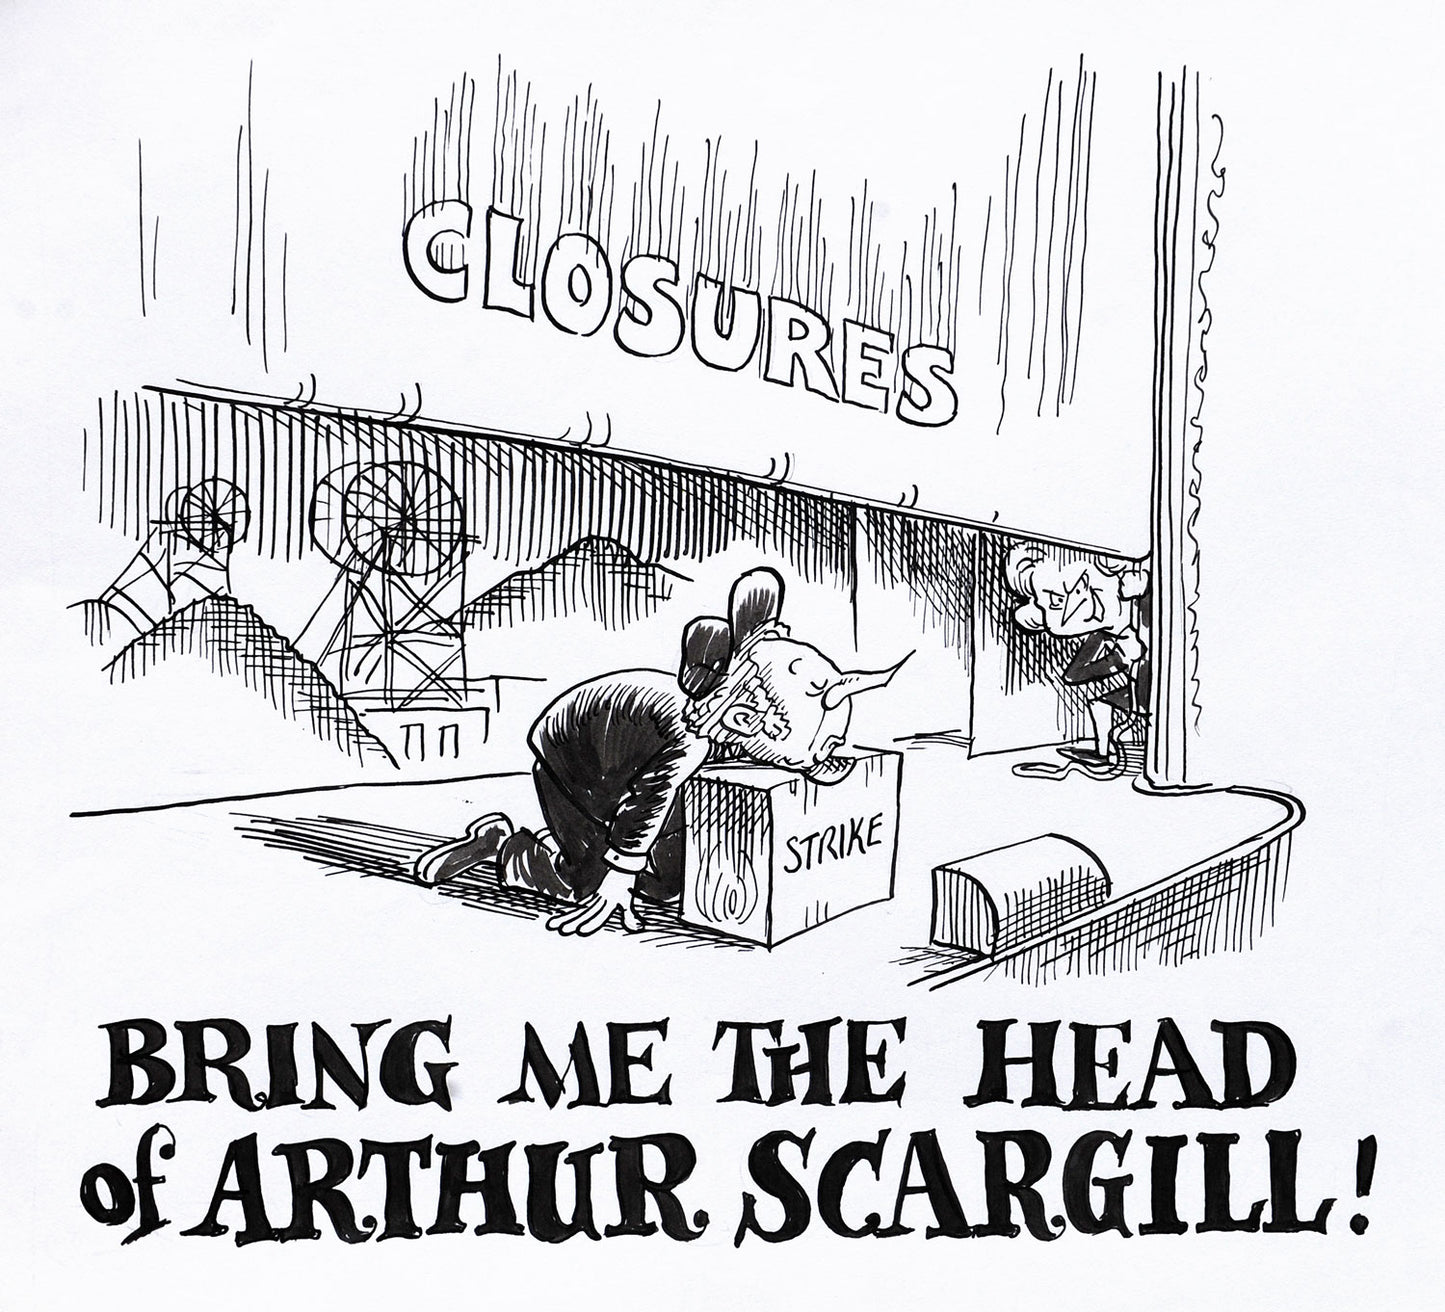 Bring me the Head of Arthur Scargill